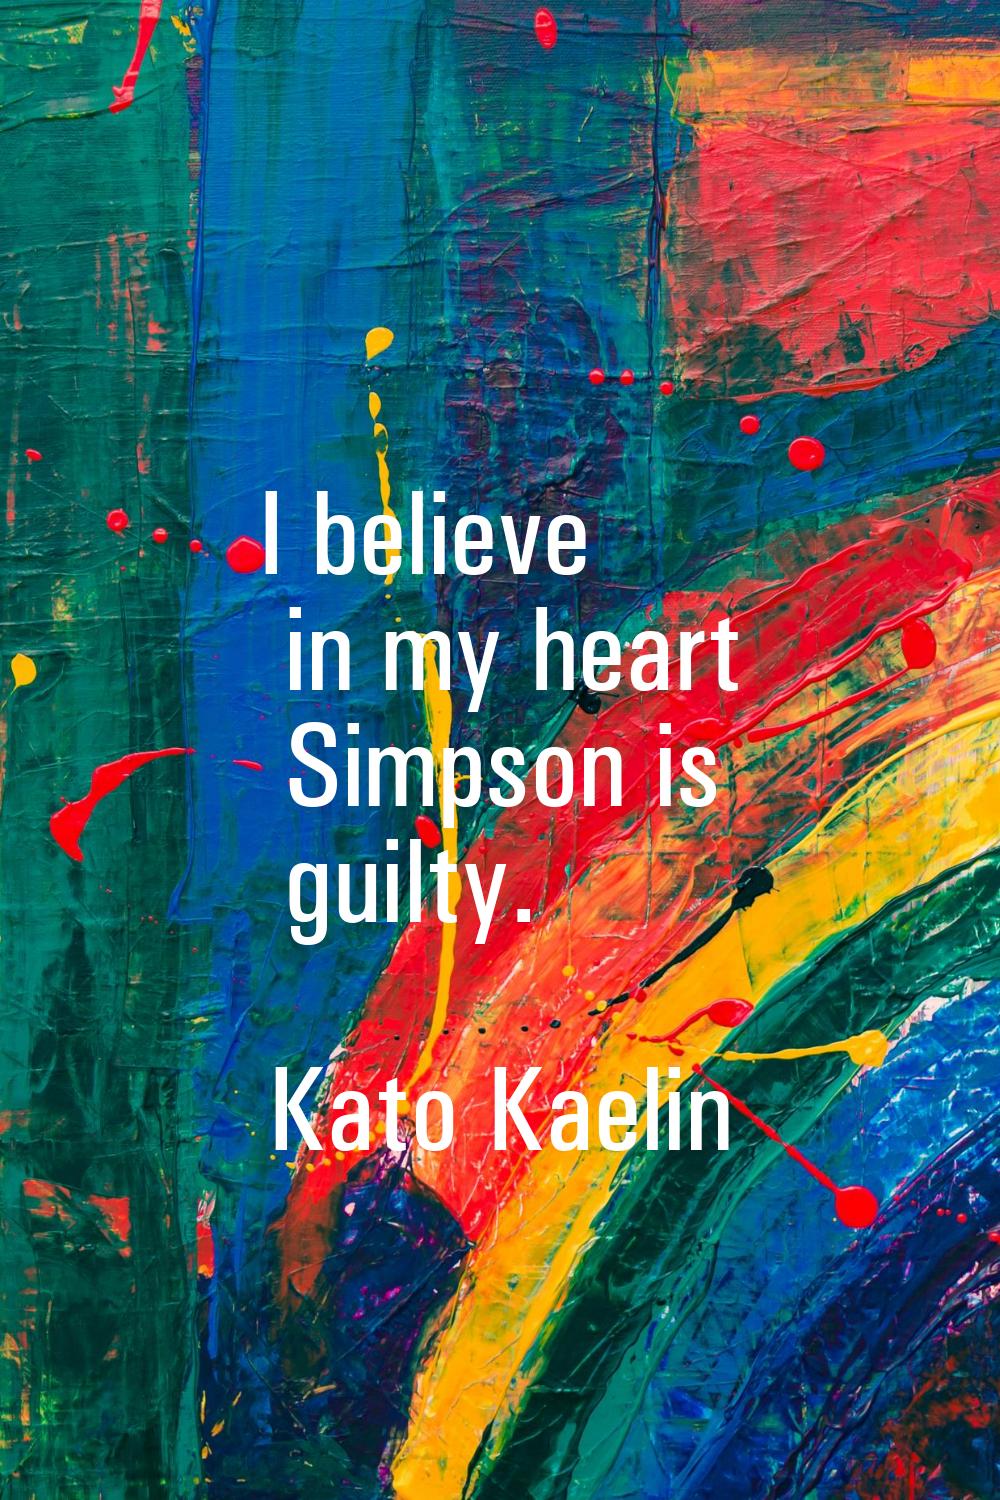 I believe in my heart Simpson is guilty.